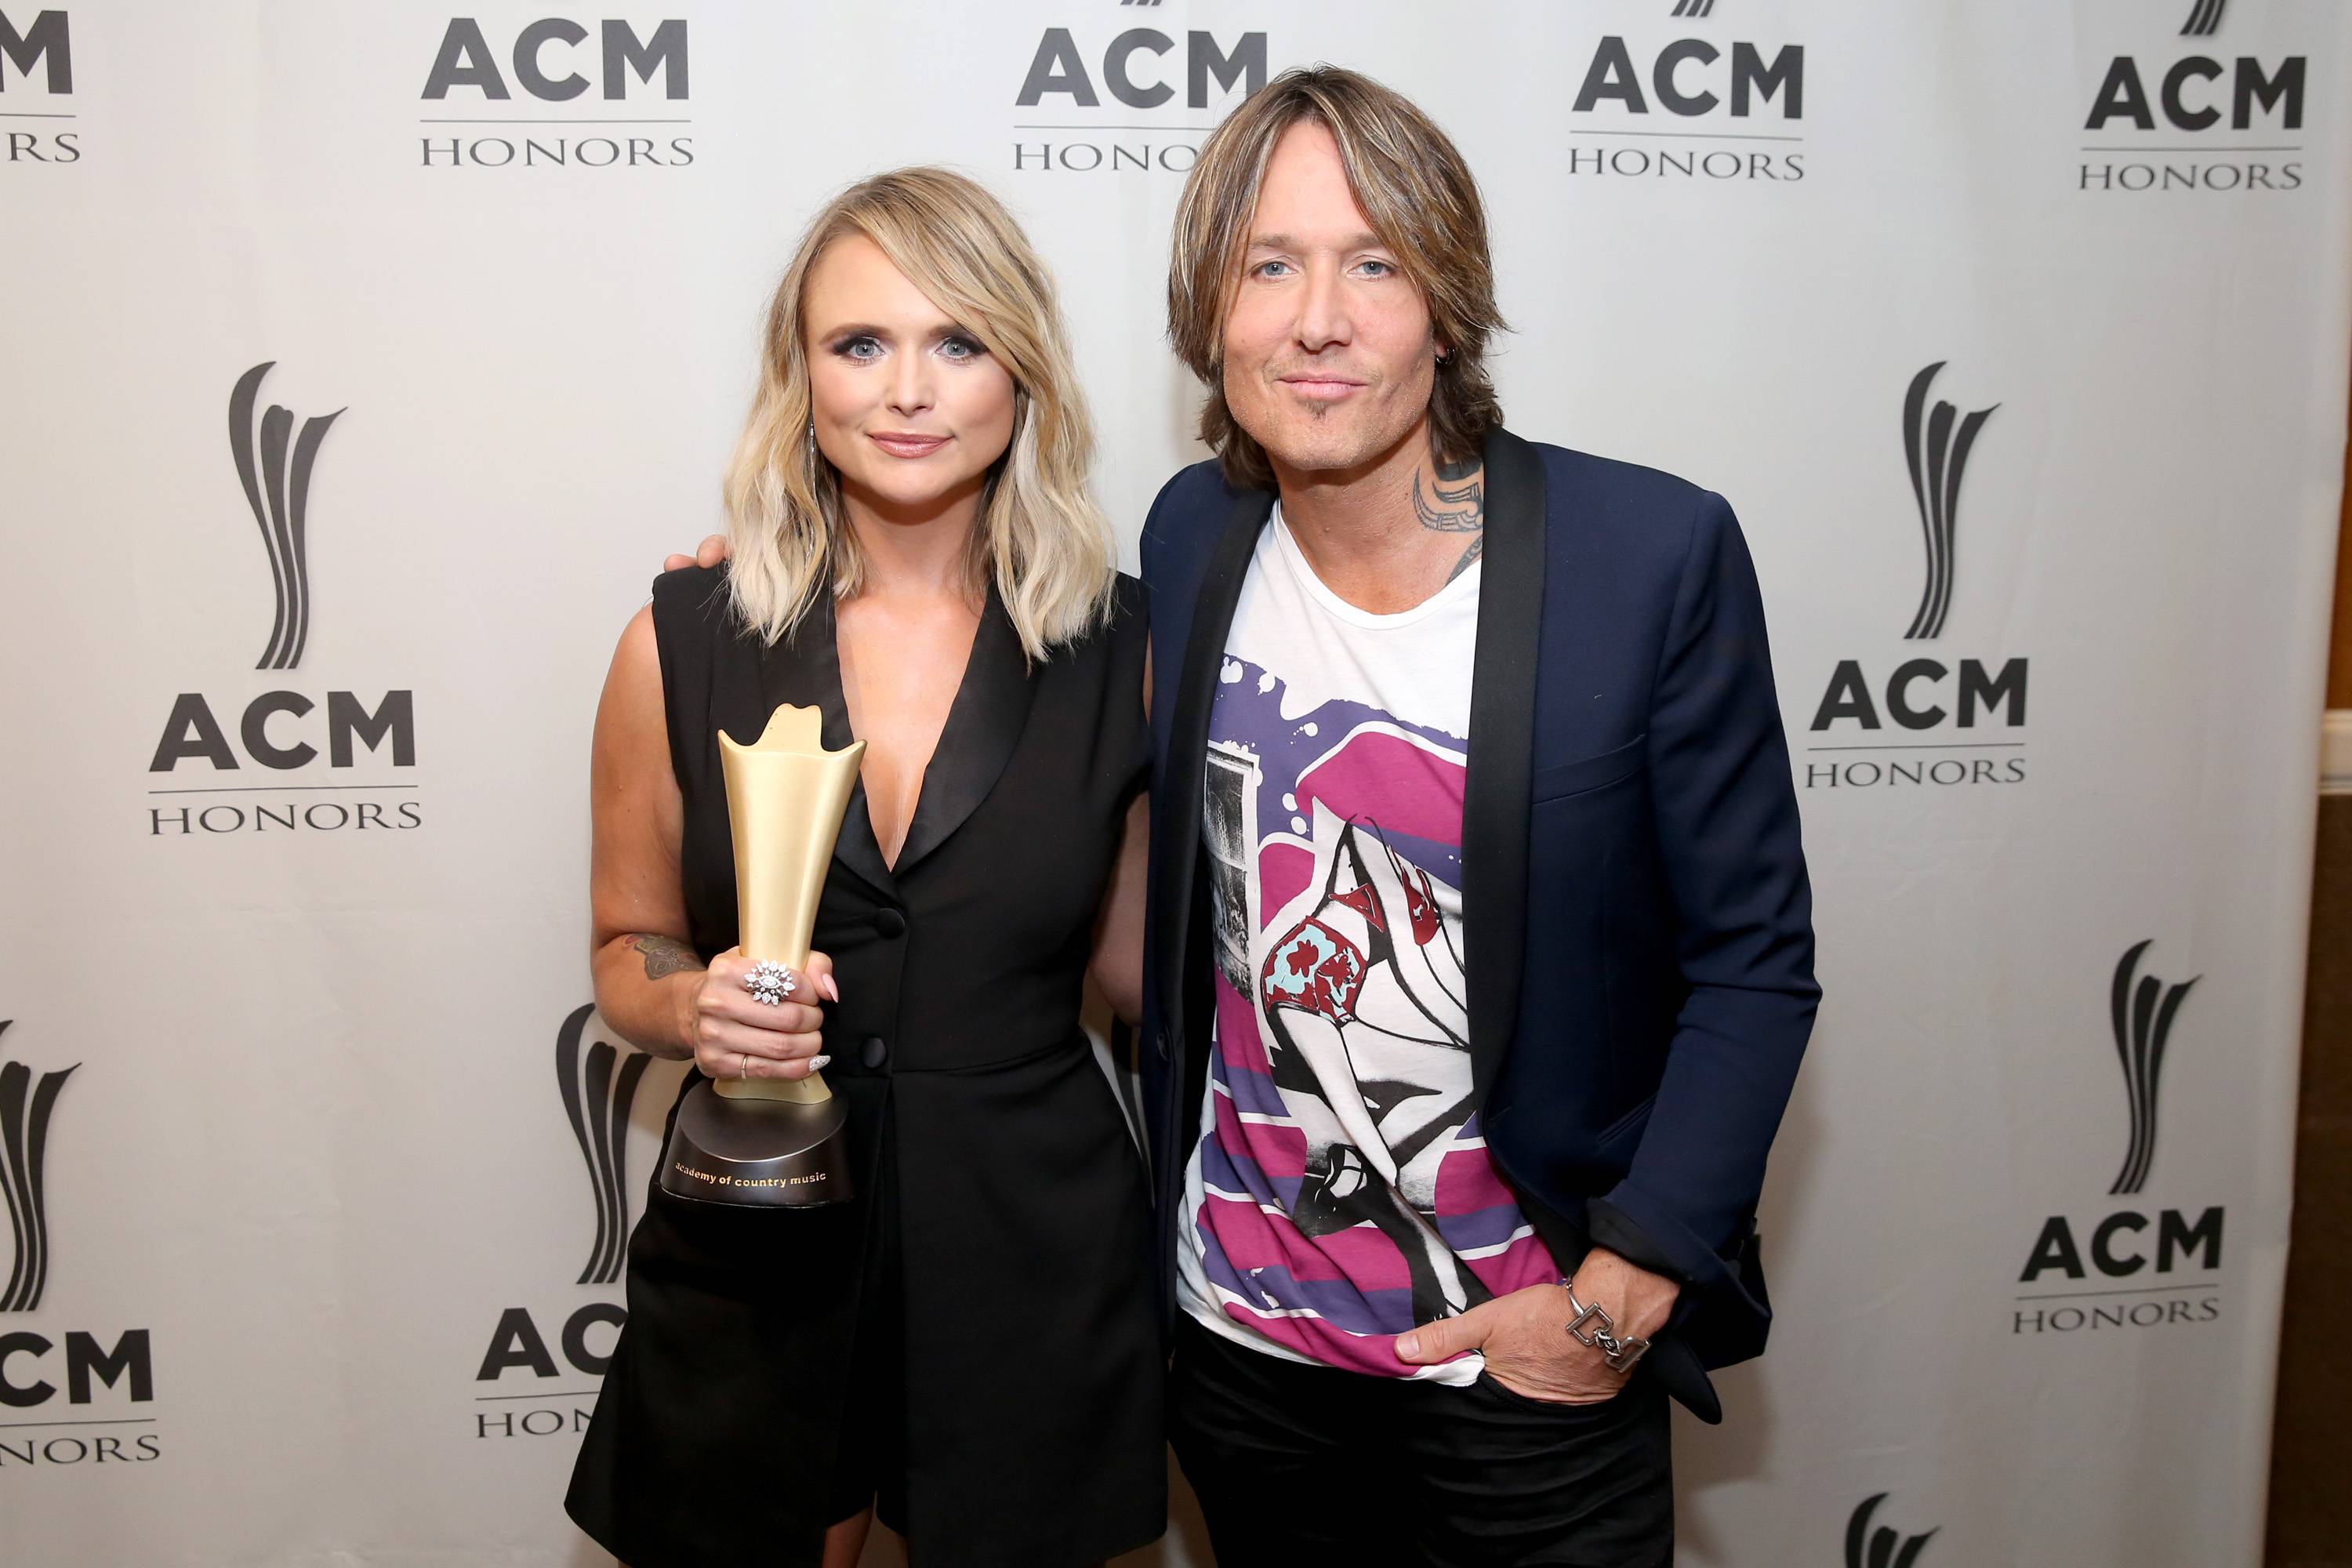 Midland talks CMA Awards, Ryman Auditorium, new album